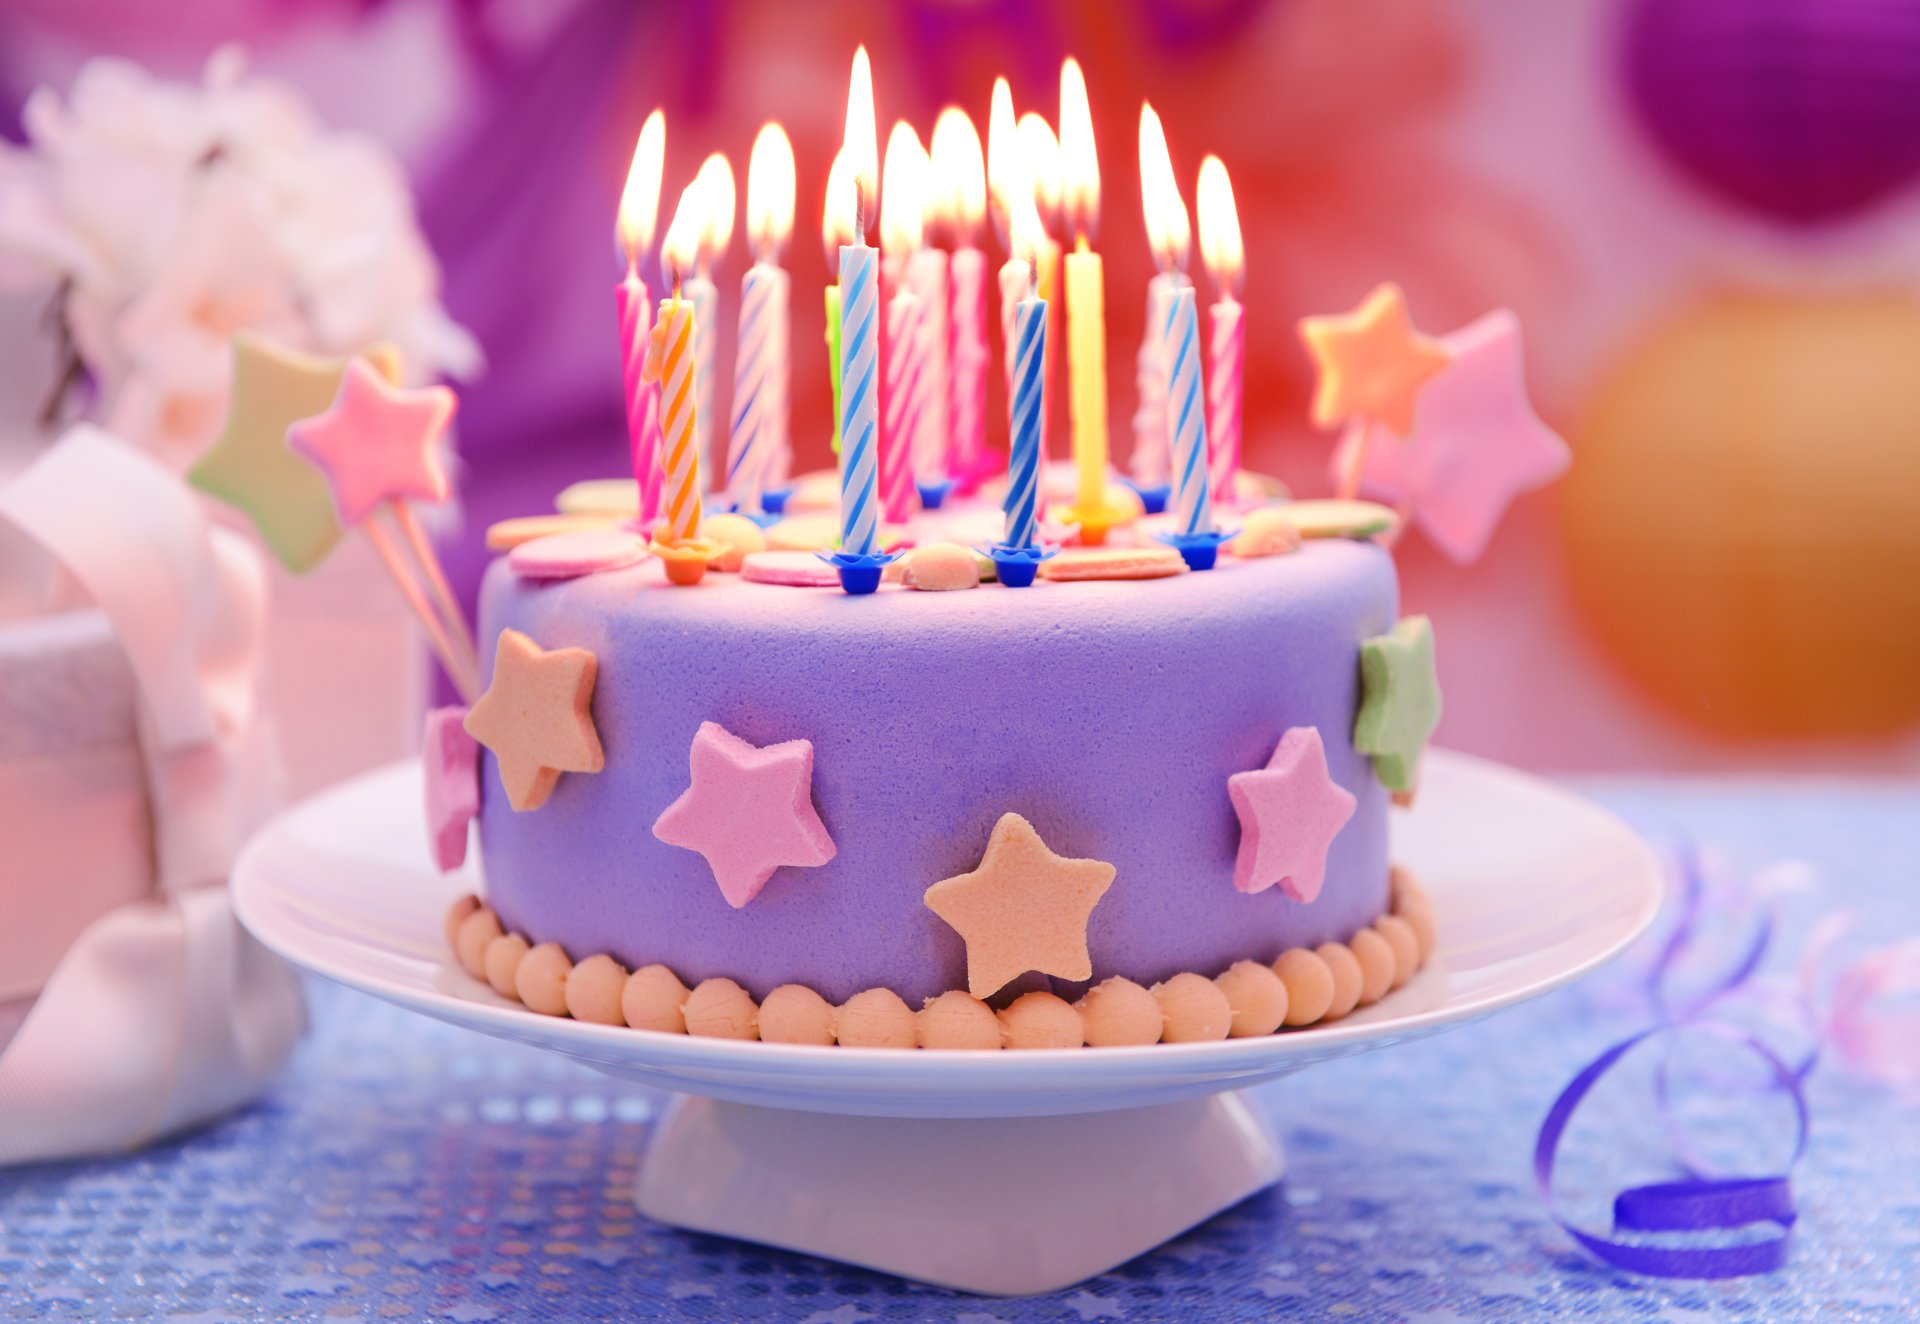 gambar kue ulang tahun warna ungu